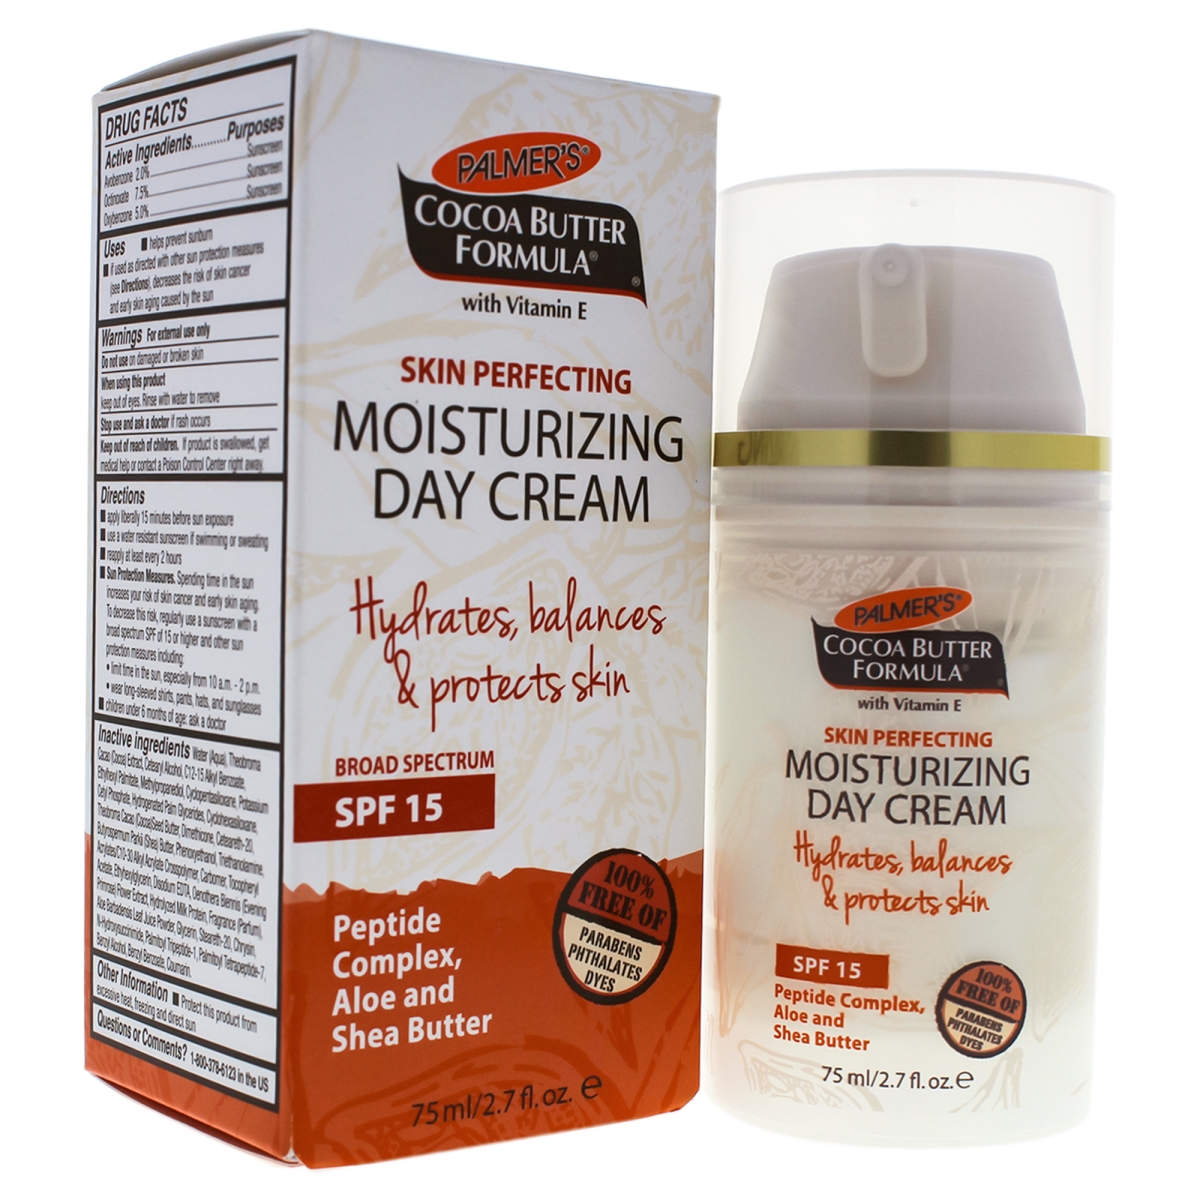 I0088390 Cocoa Butter Skin Perfecting Moisturising Day Cream Spf 15 For Unisex - 2.7 Oz